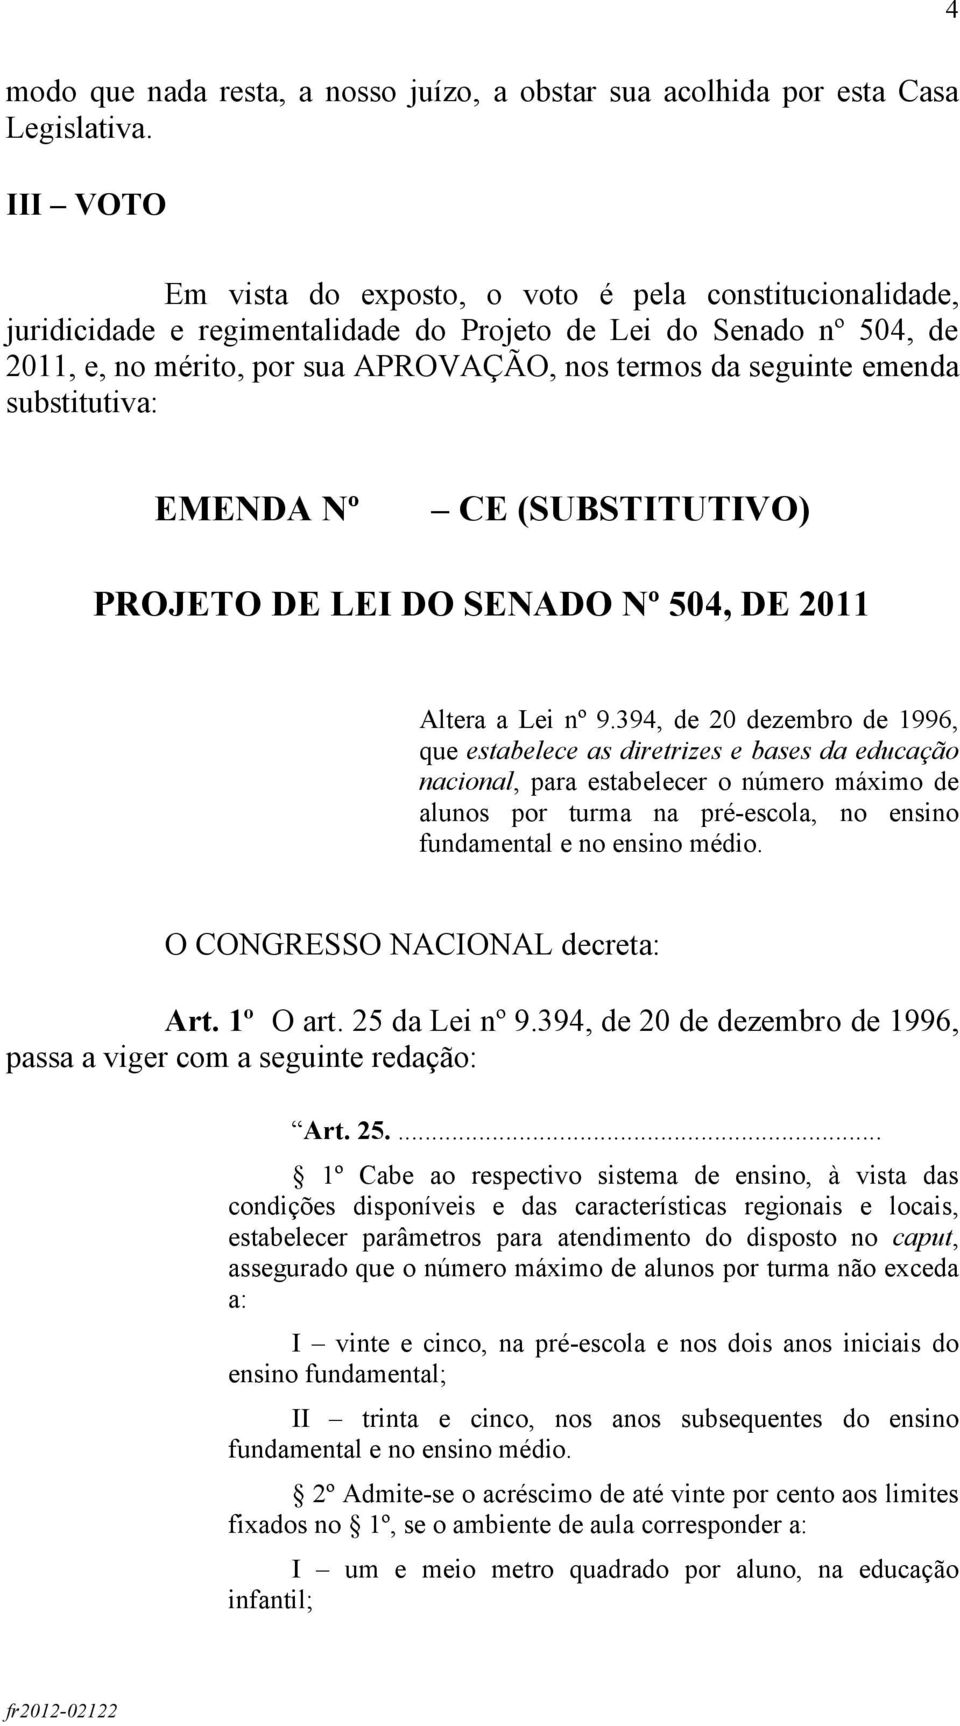 emenda substitutiva: EMENDA Nº CE (SUBSTITUTIVO) PROJETO DE LEI DO SENADO Nº 504, DE 2011 Altera a Lei nº 9.